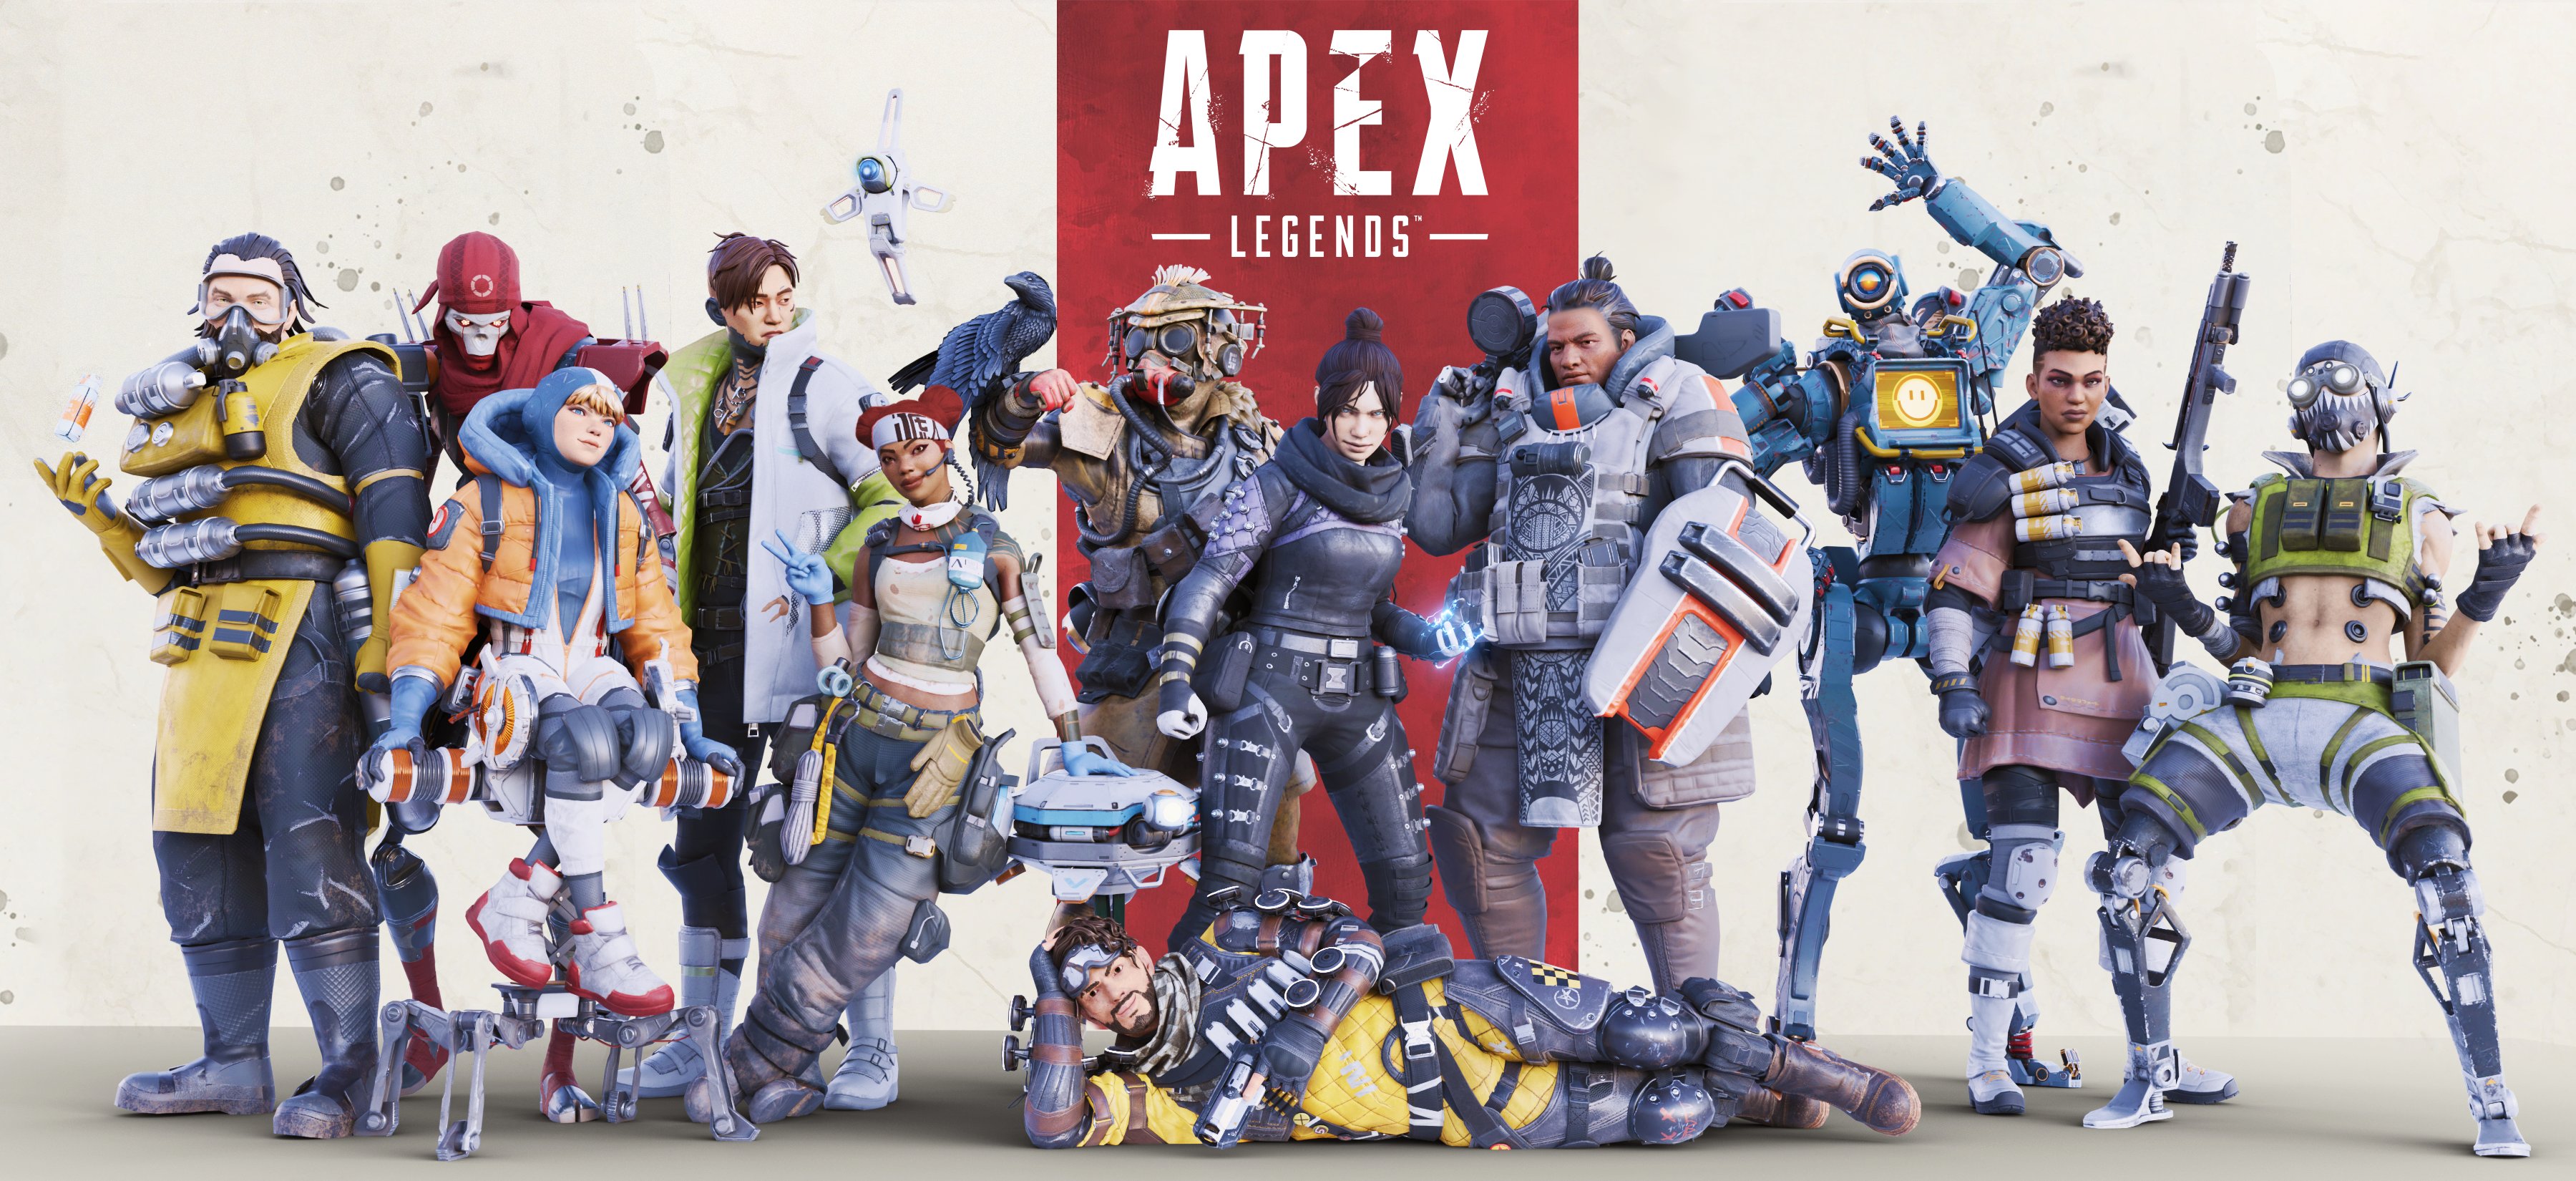 Apex Legends 2020 Wallpapers